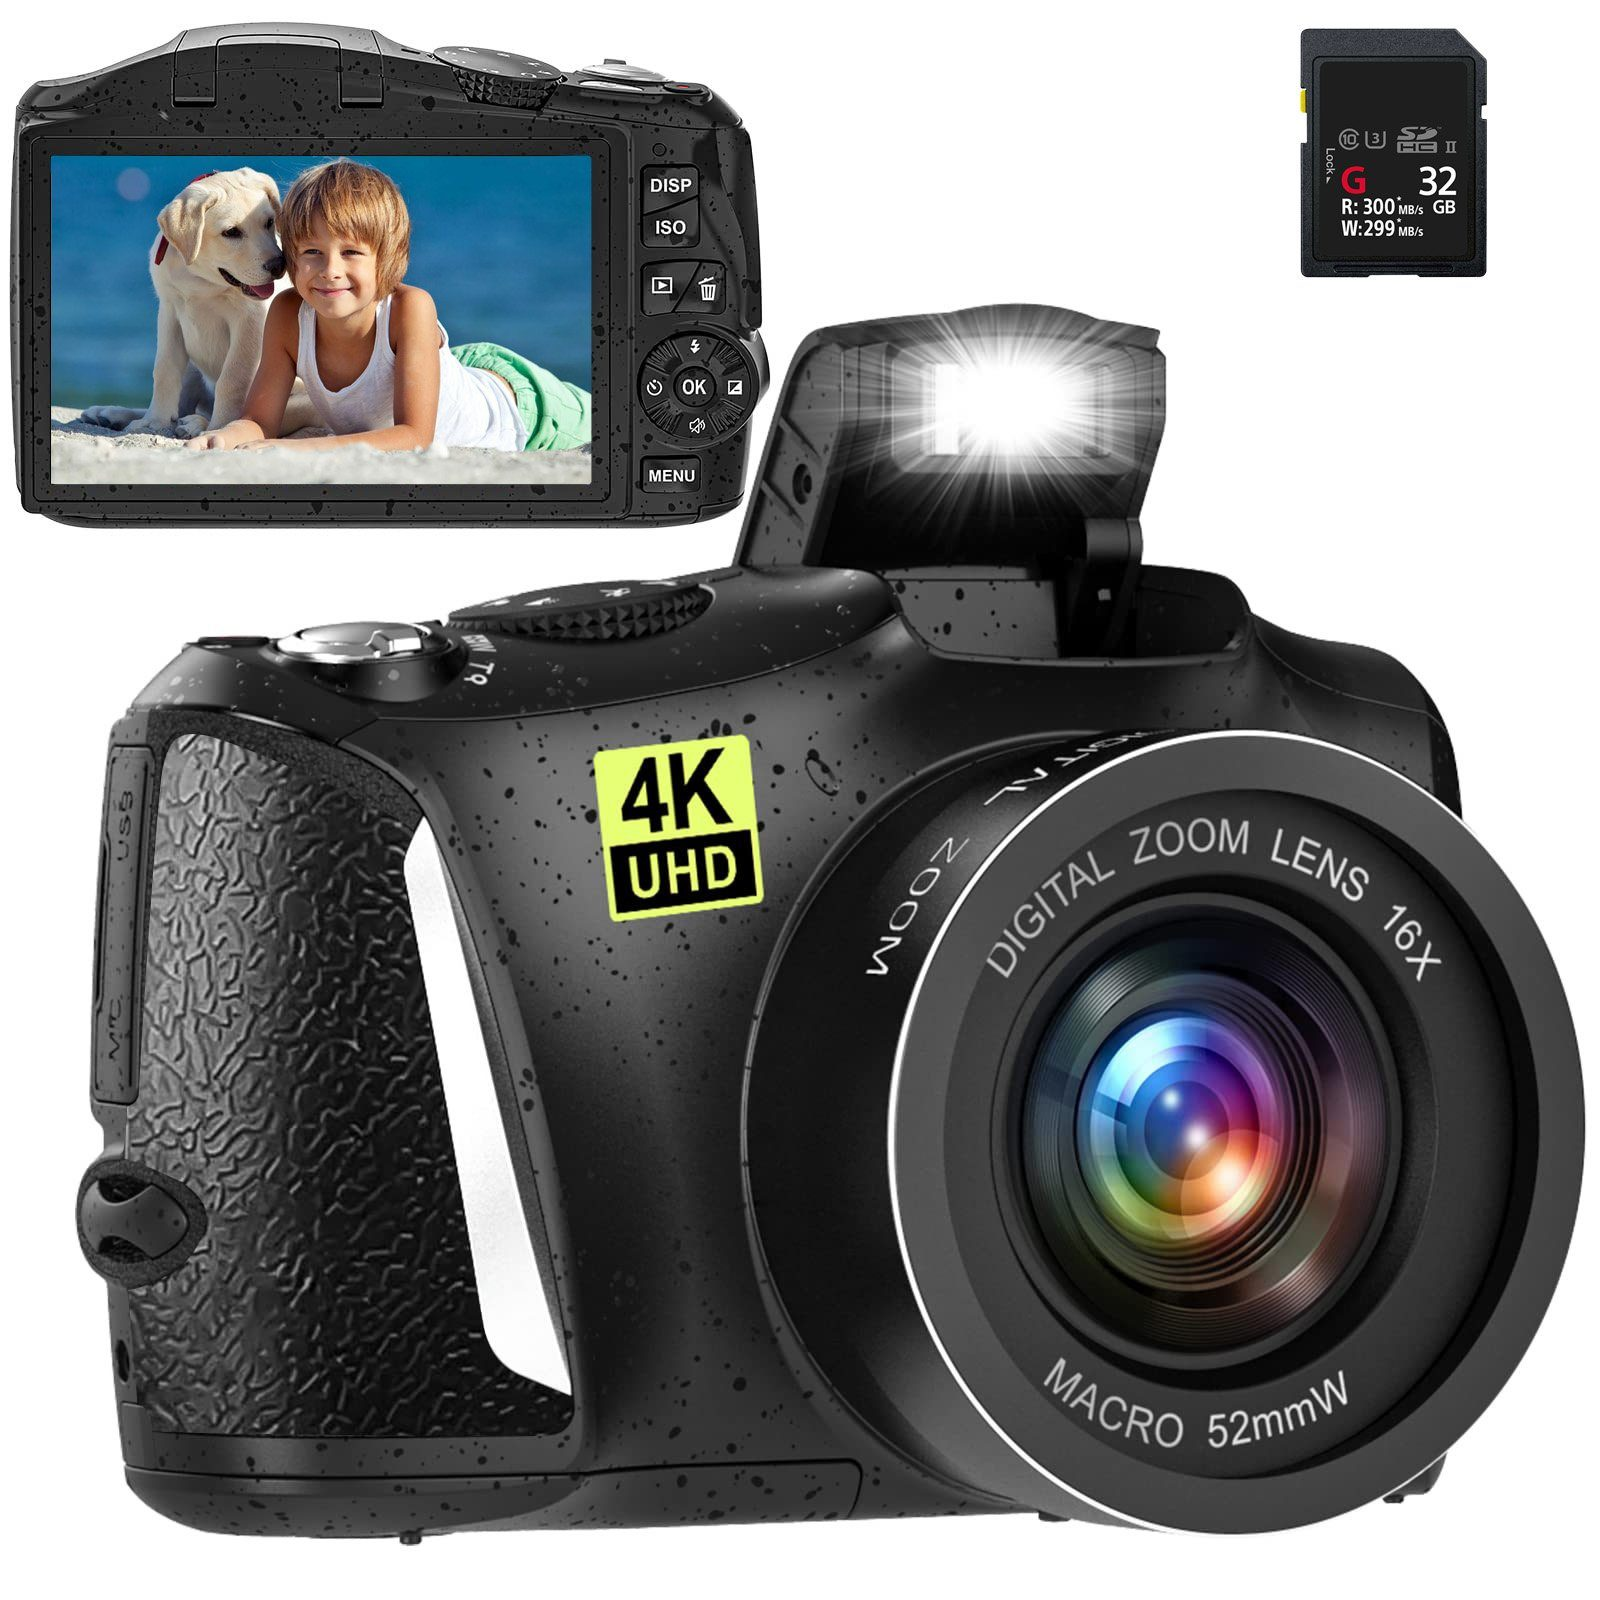 Schwarz Megapixel Kompaktkamera LIFE 48 3,0-Zoll-IPS-LCD-Display, FINE PRO